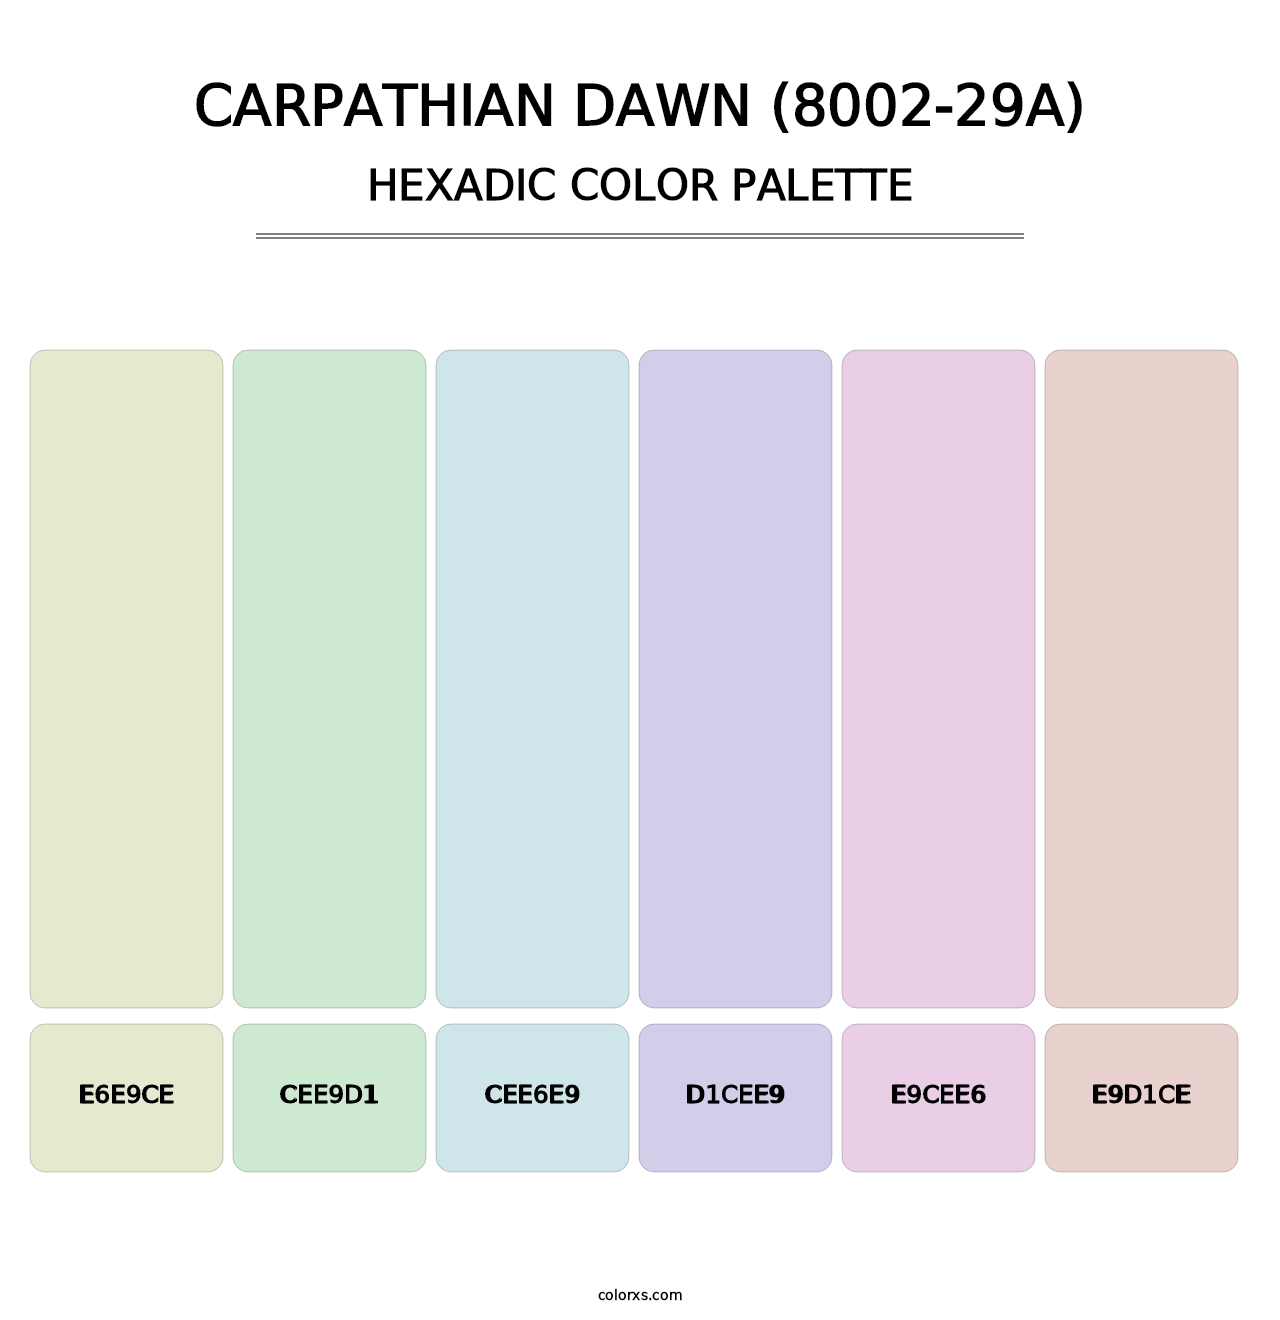 Carpathian Dawn (8002-29A) - Hexadic Color Palette